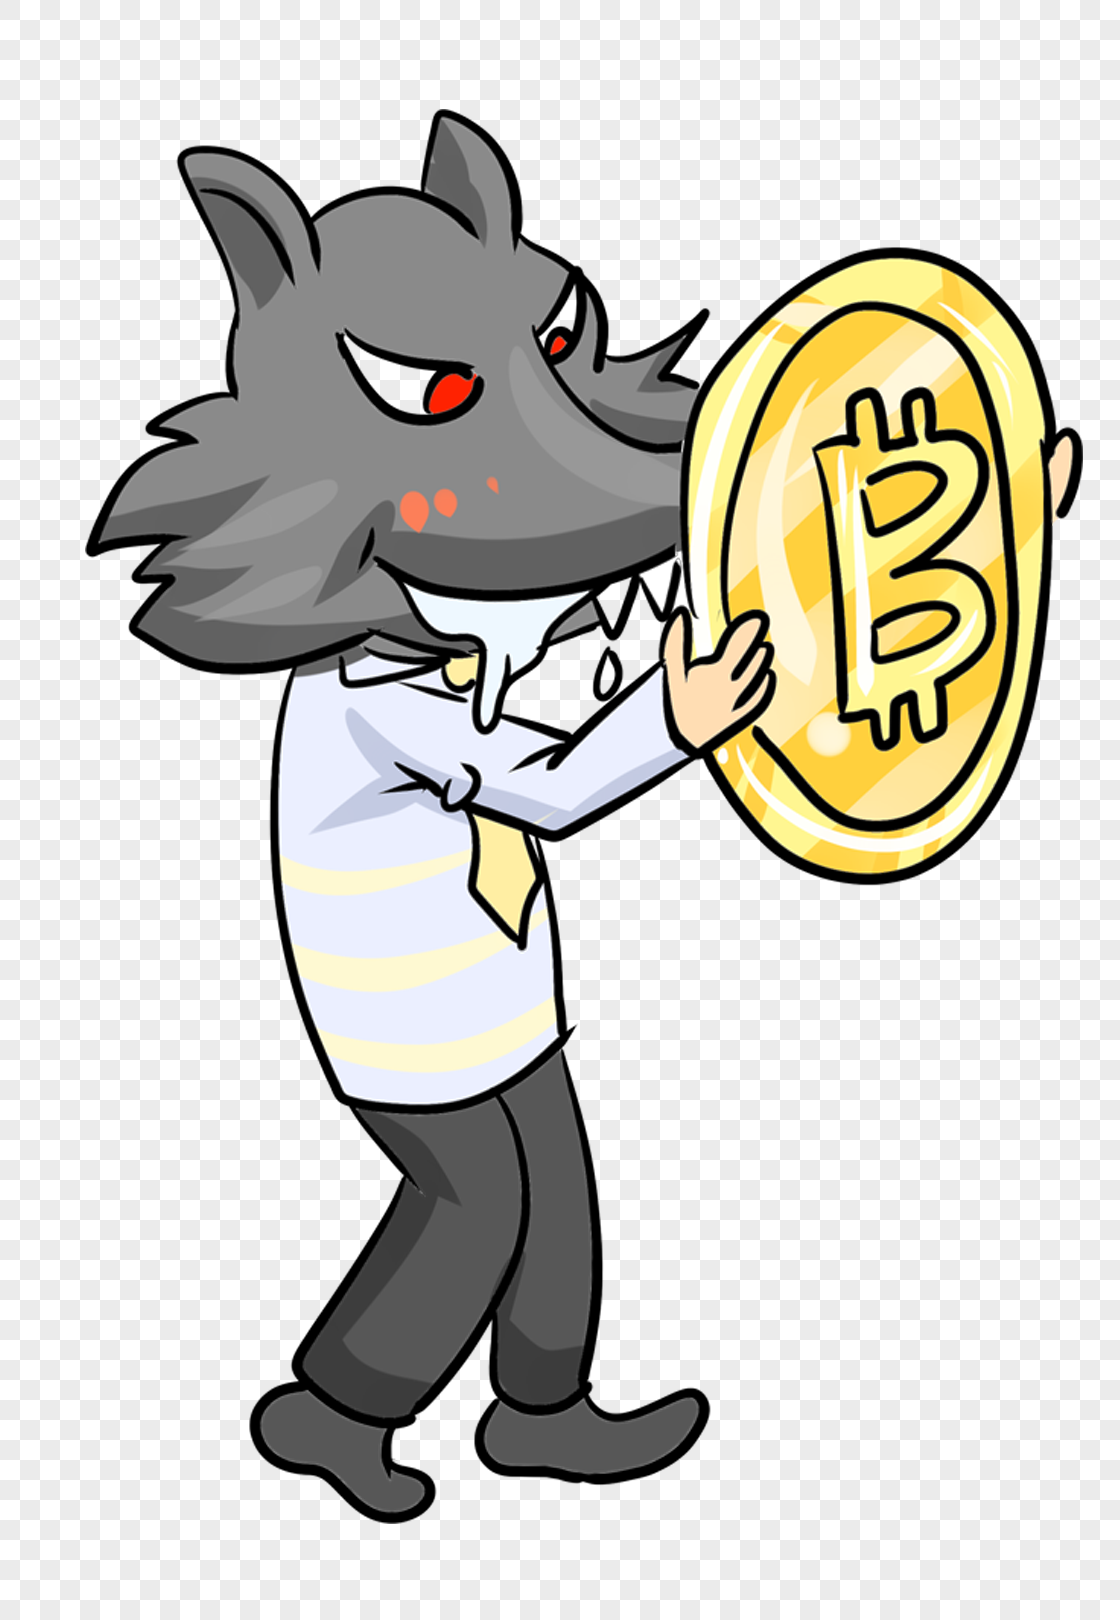 Bitcoin wolf bitcoin vs ethereum vs litecoin differences